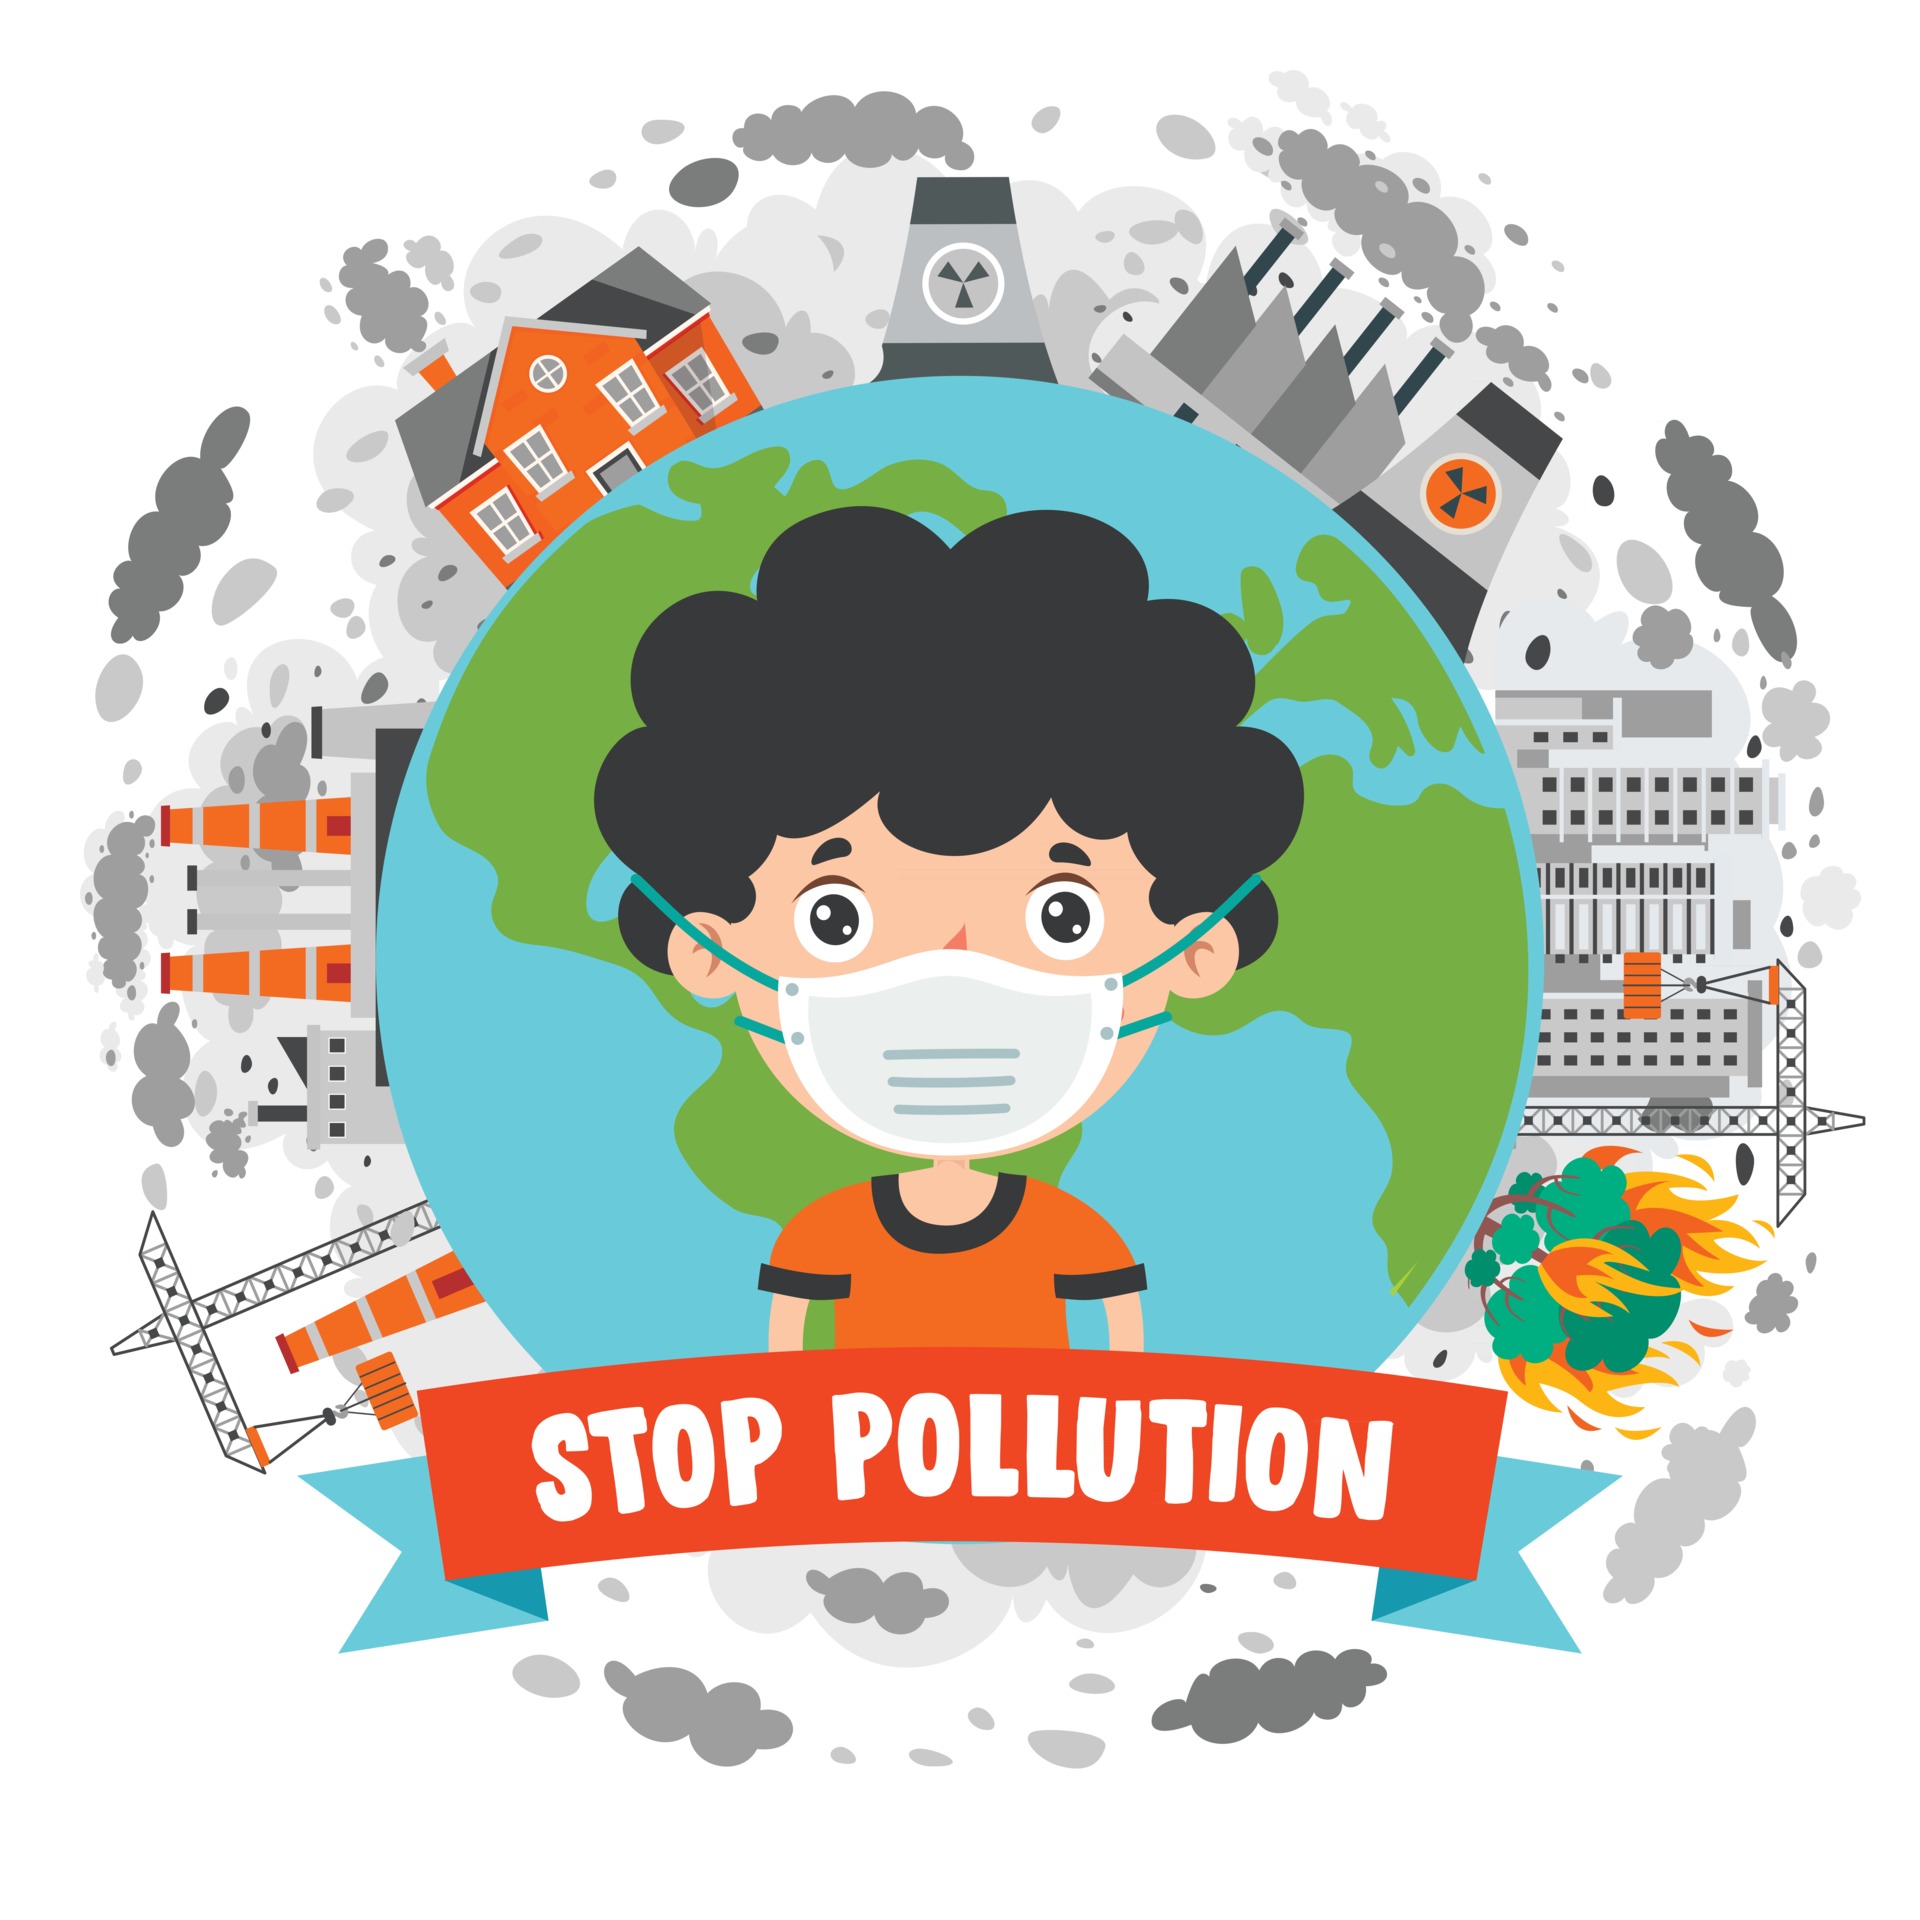 Image air pollution - free printable images - Img 21772.-saigonsouth.com.vn